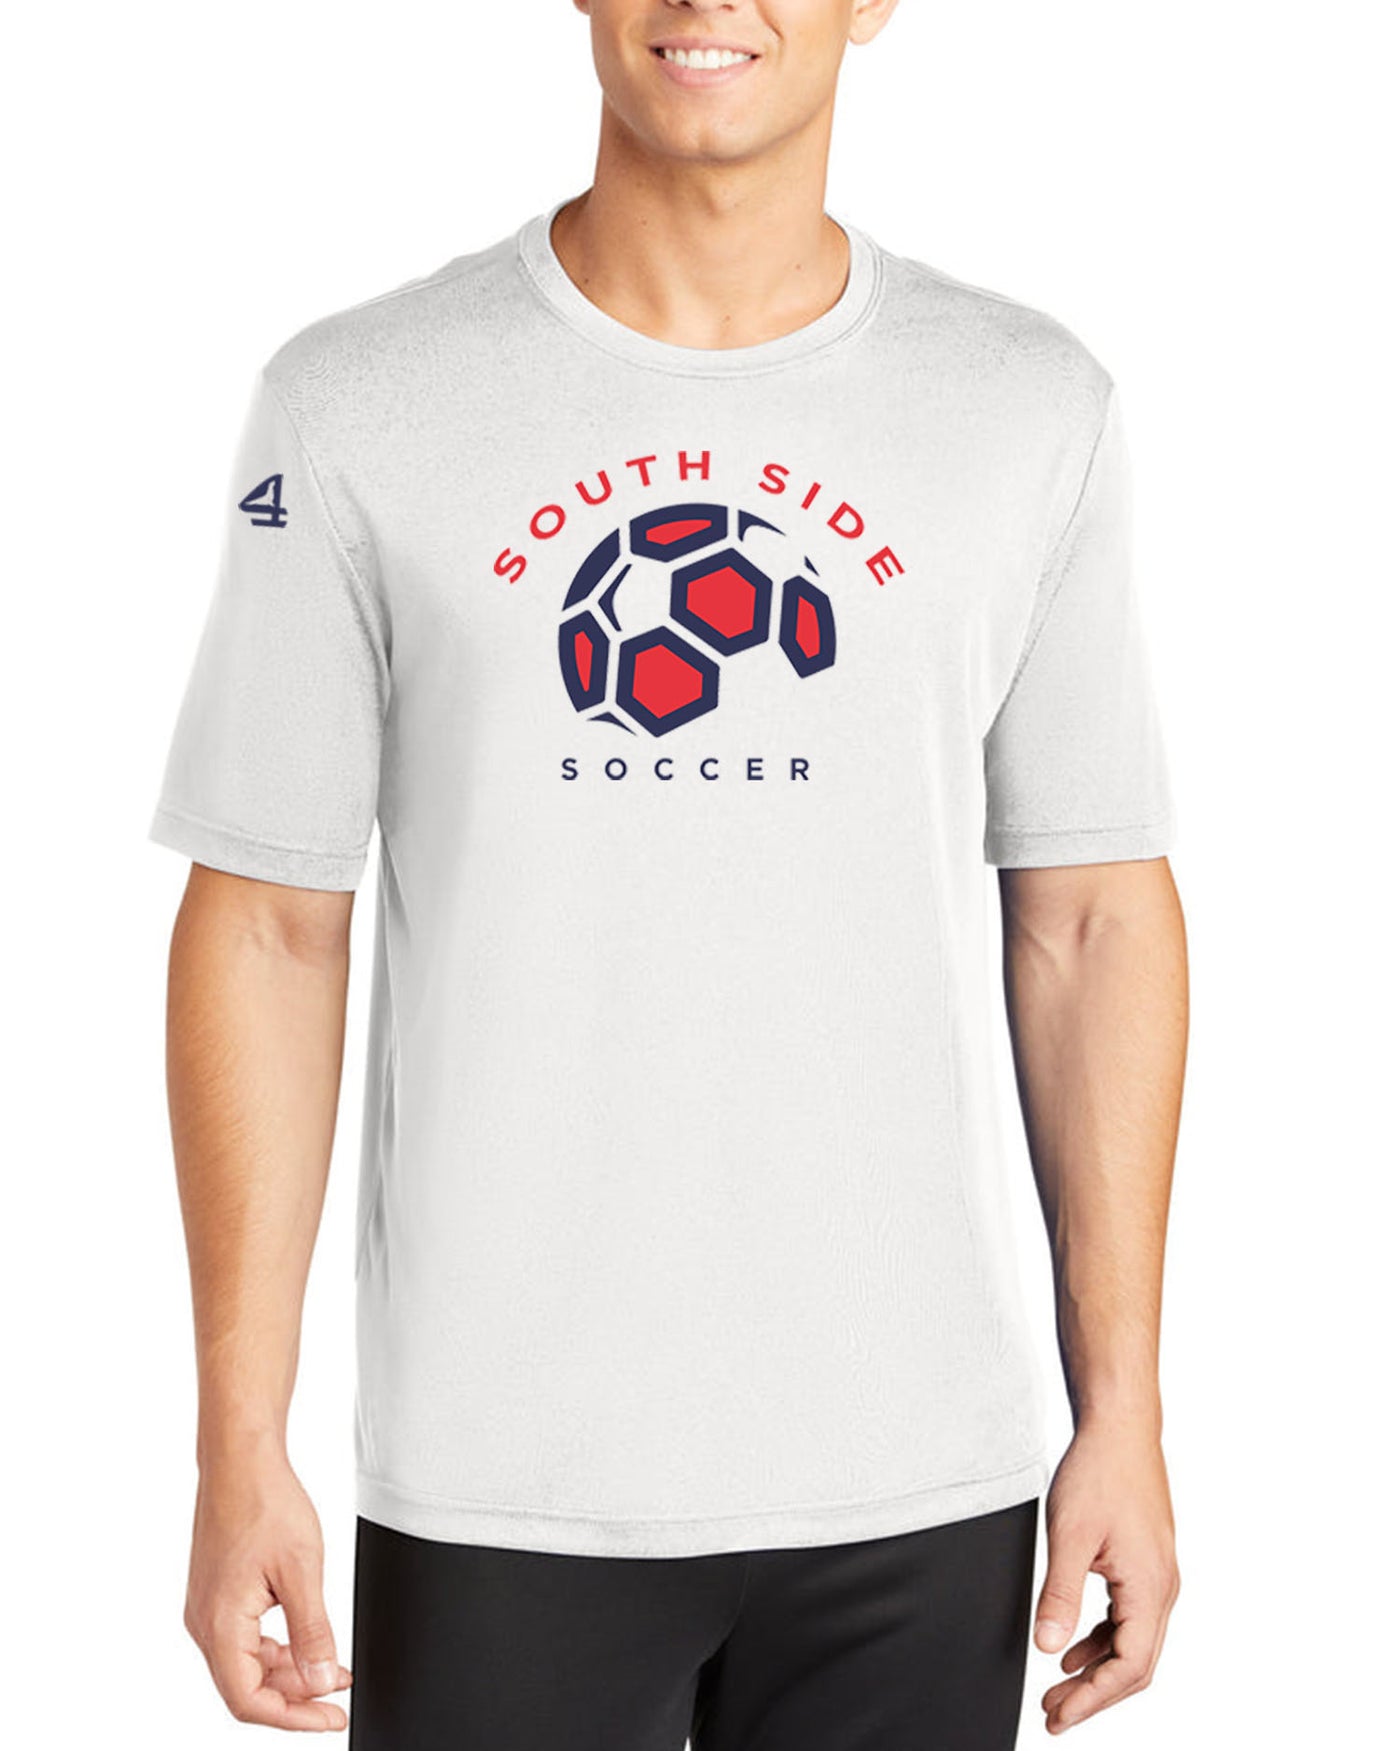 Warm Up Short Sleeve Performance T-Shirt - South Side Girls Soccer